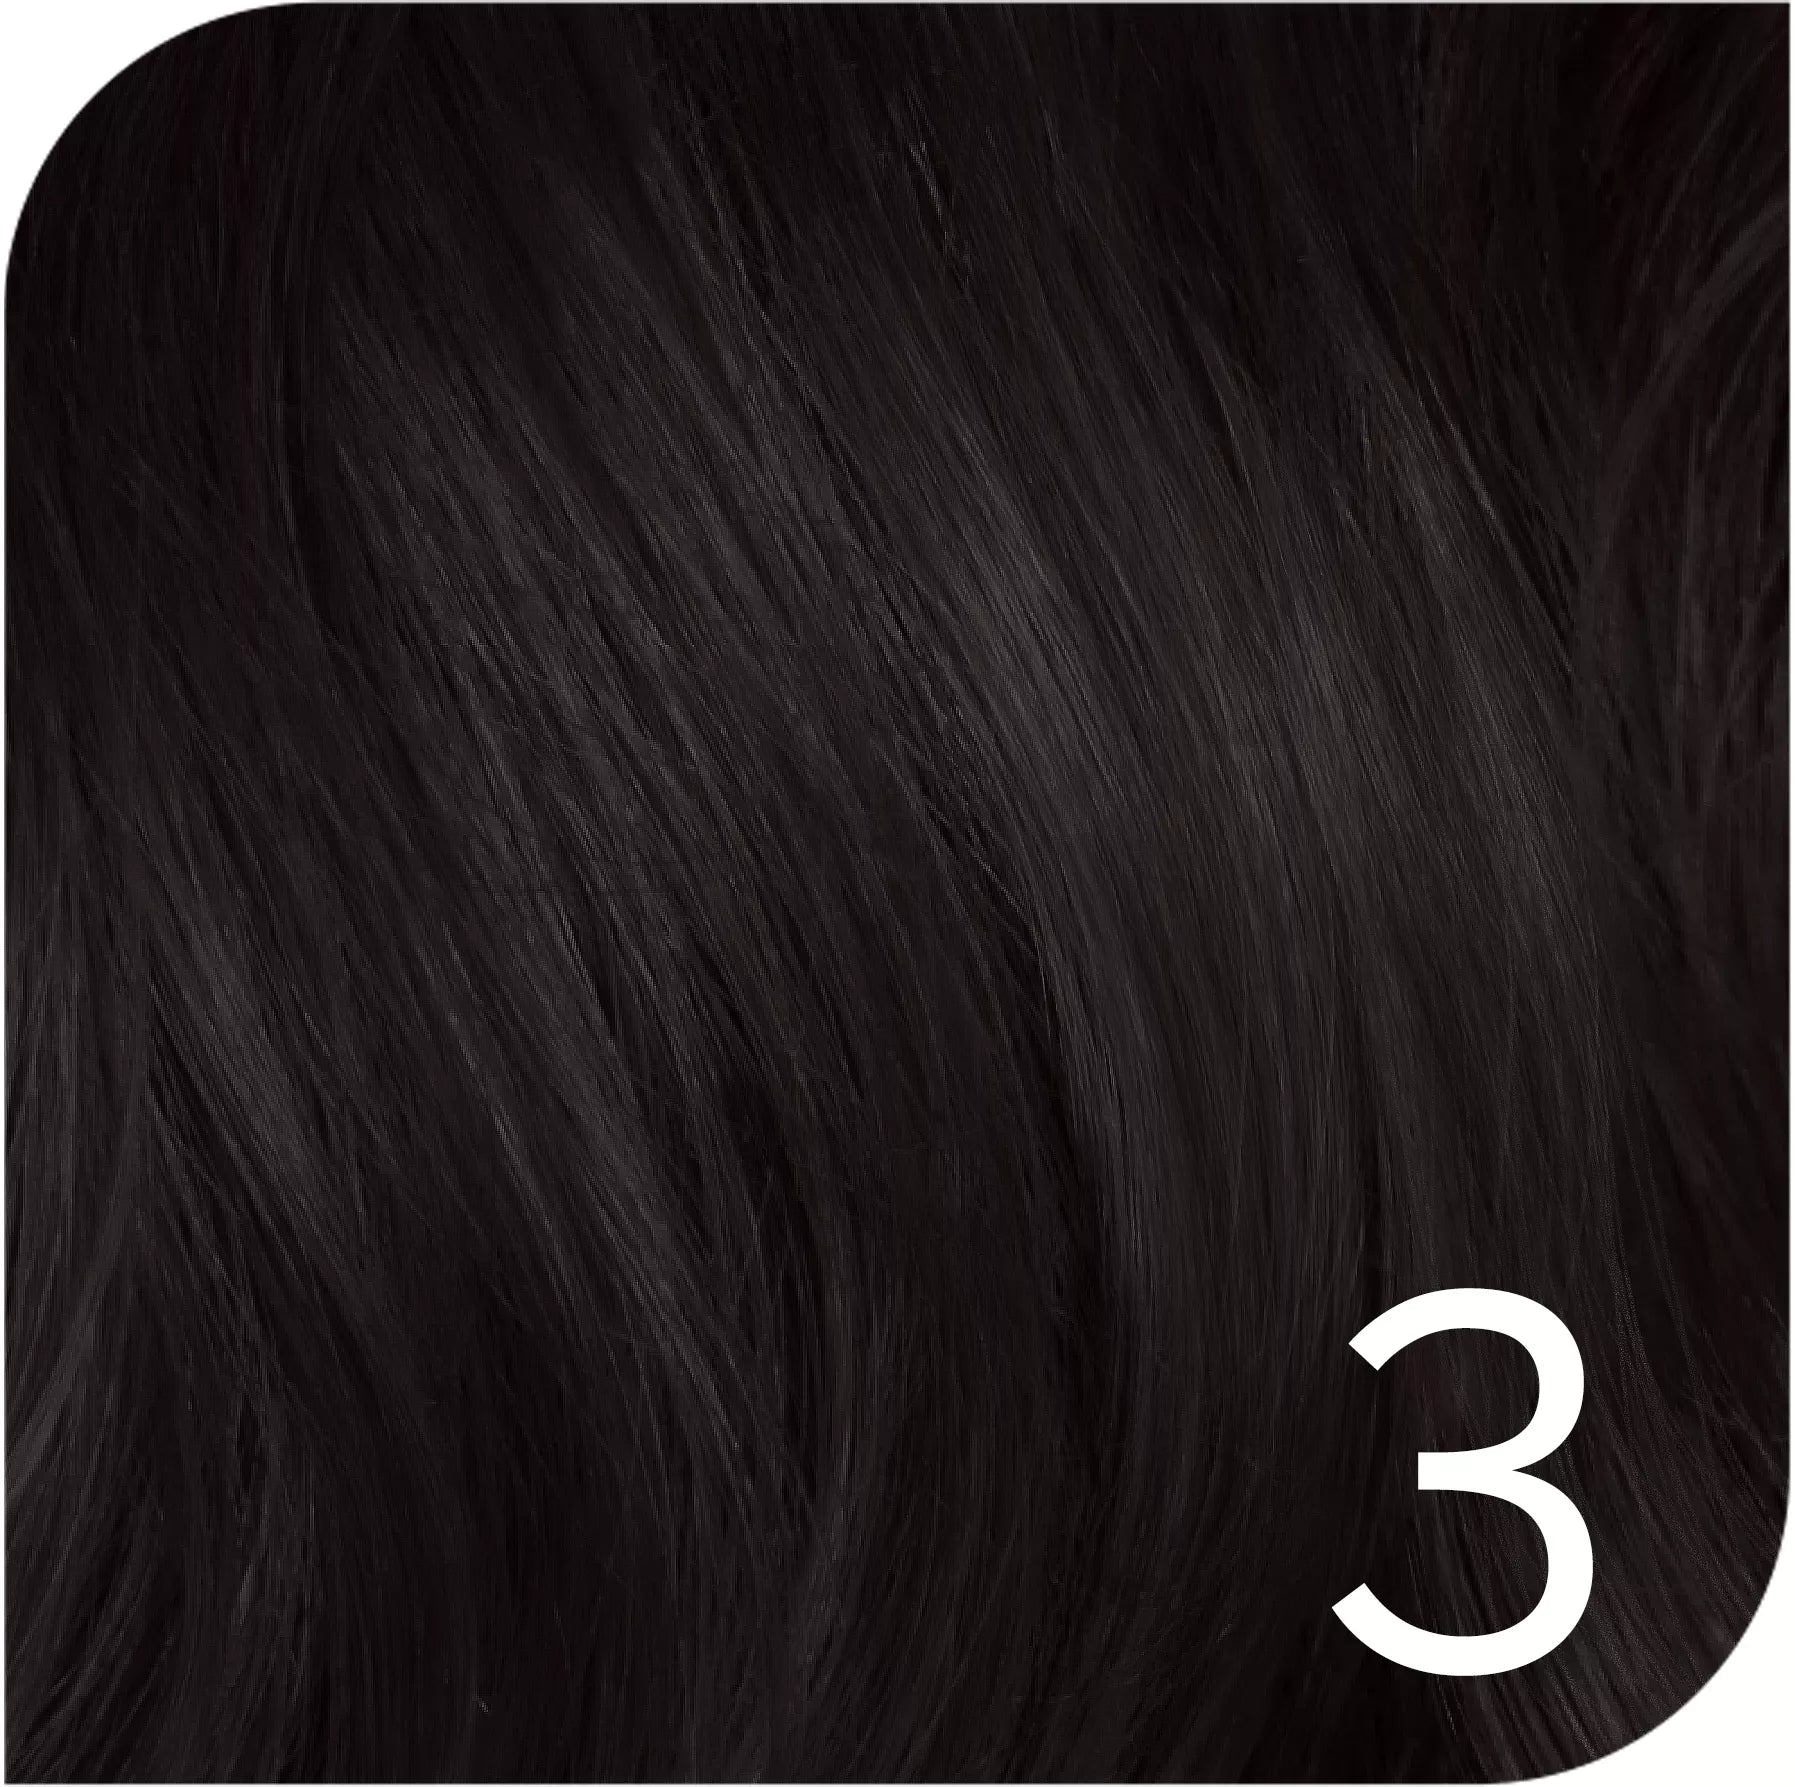 3 - Sublime Dark Brown Chestnut Professional Hair Color Cream